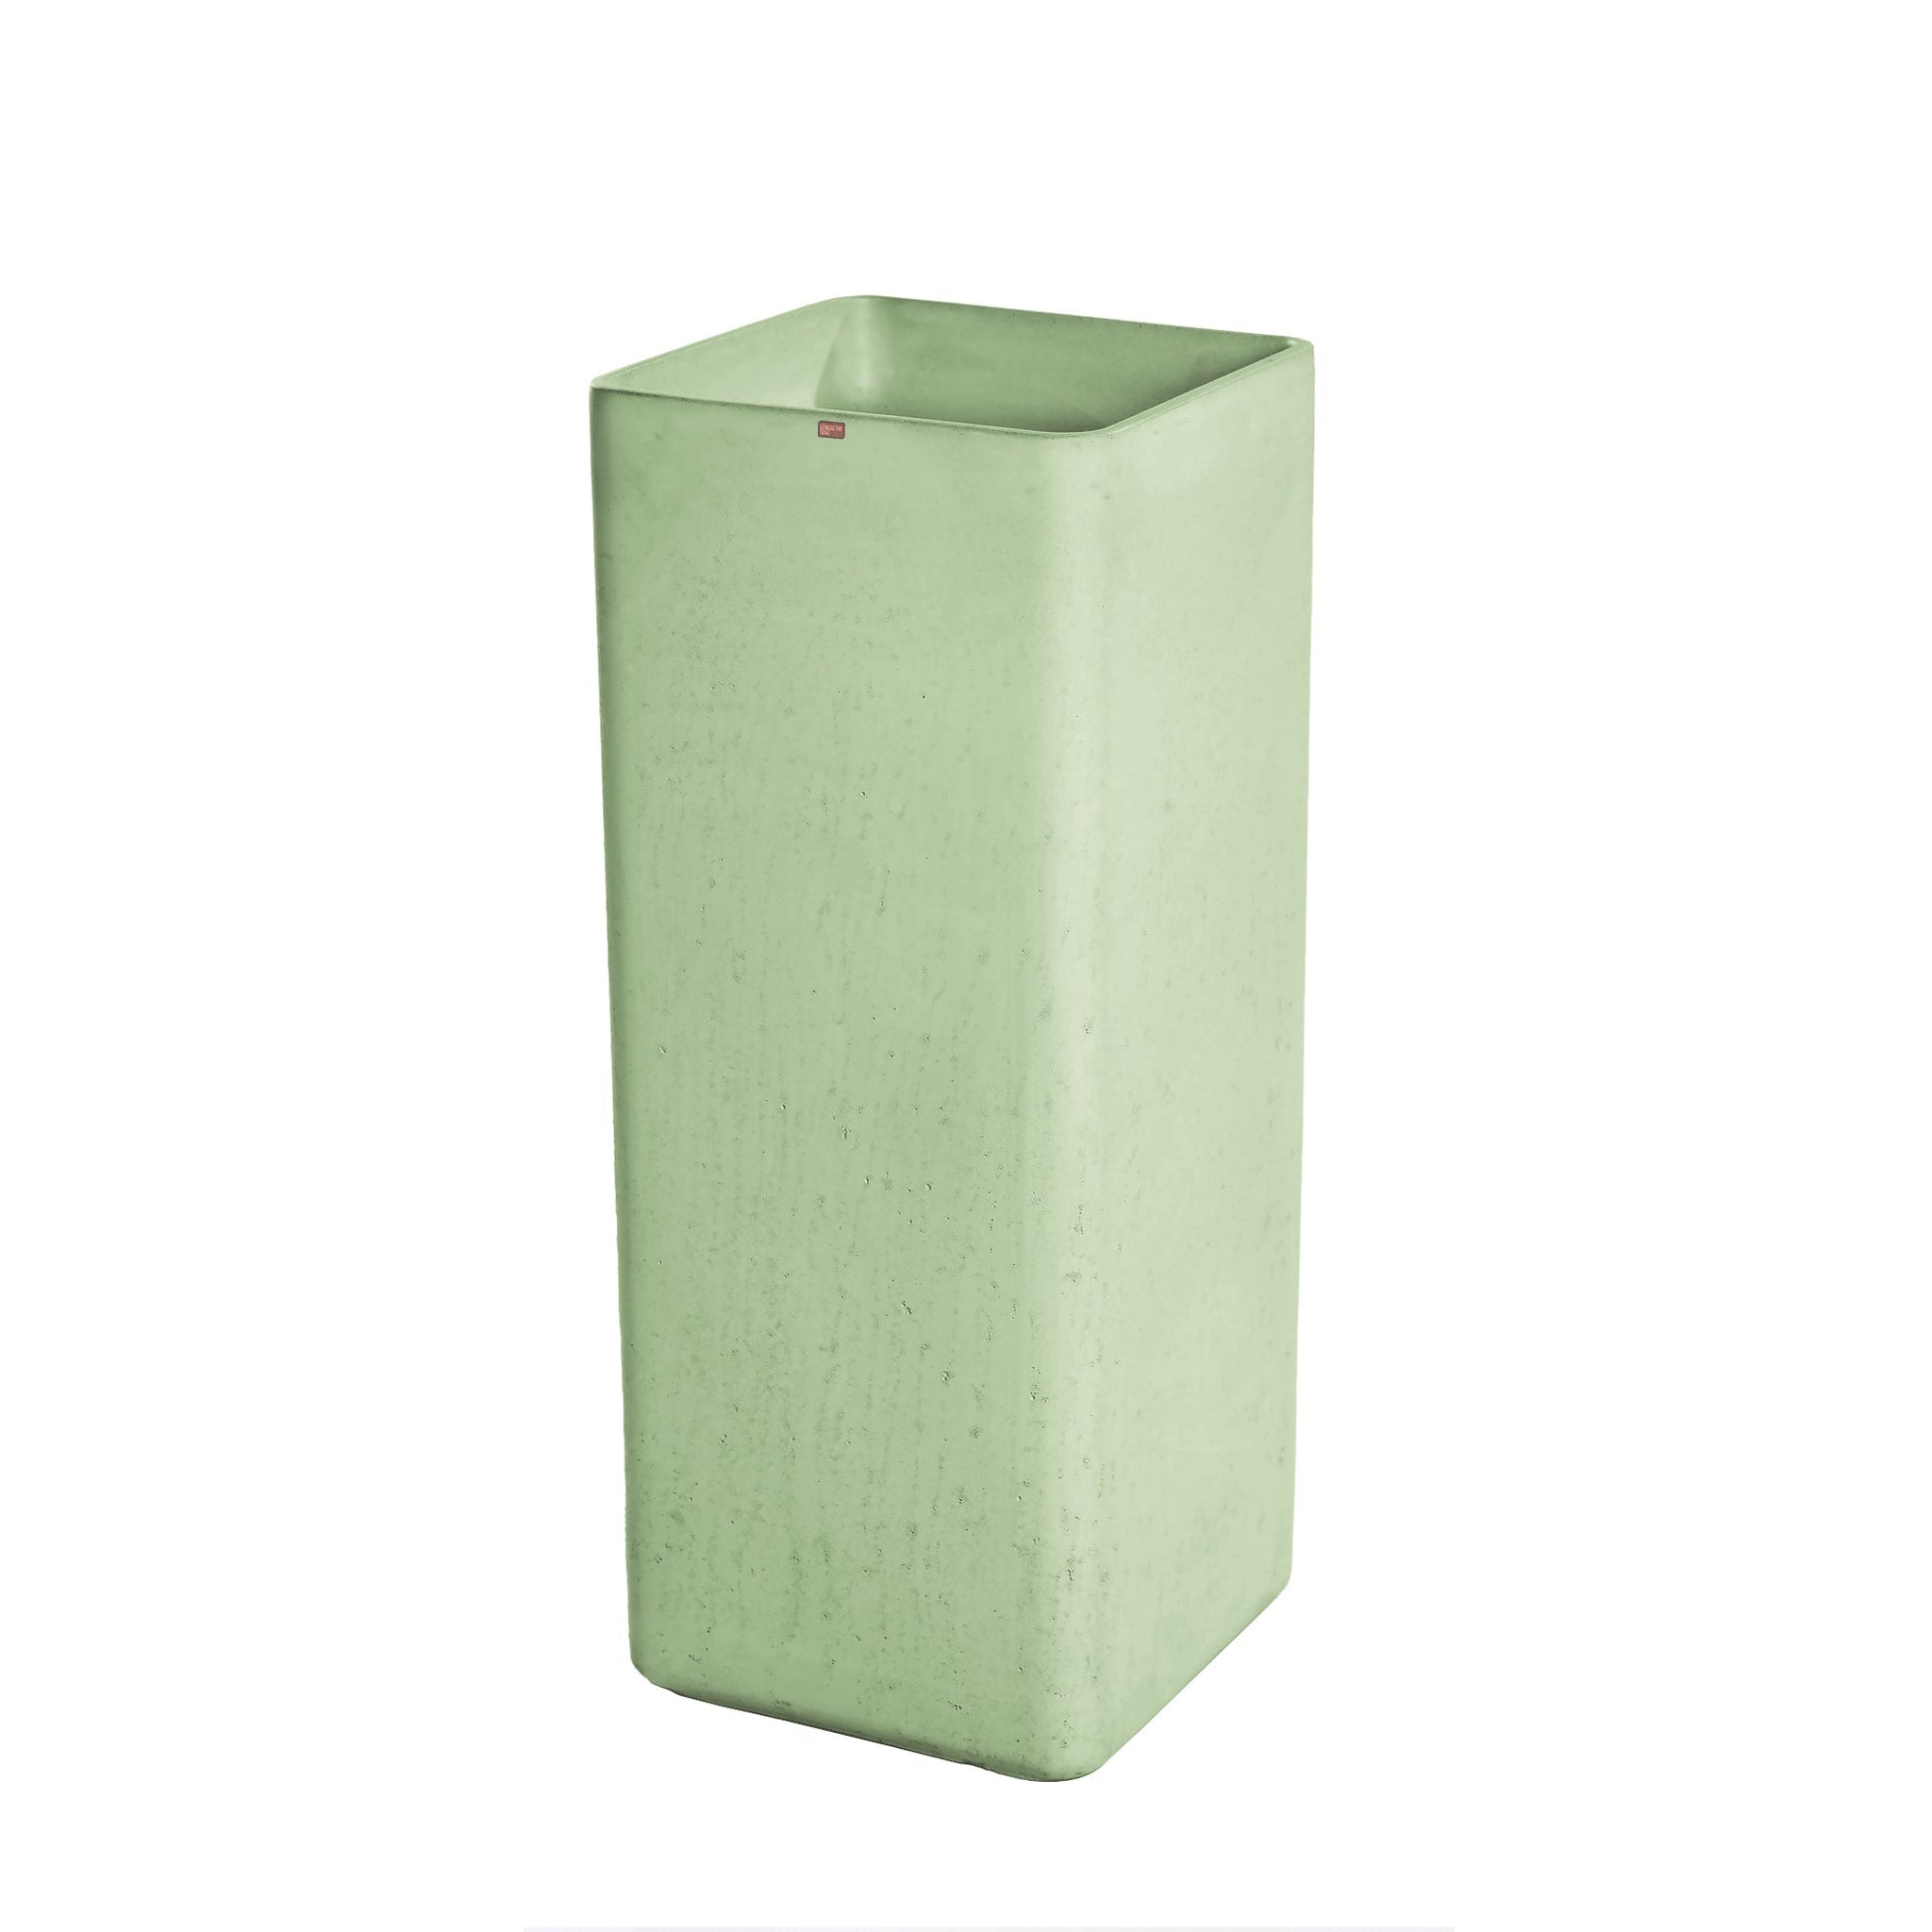 Konkretus, Konkretus Fladd06 15" Ceiba Green Square Pedestal Concrete Bathroom Sink